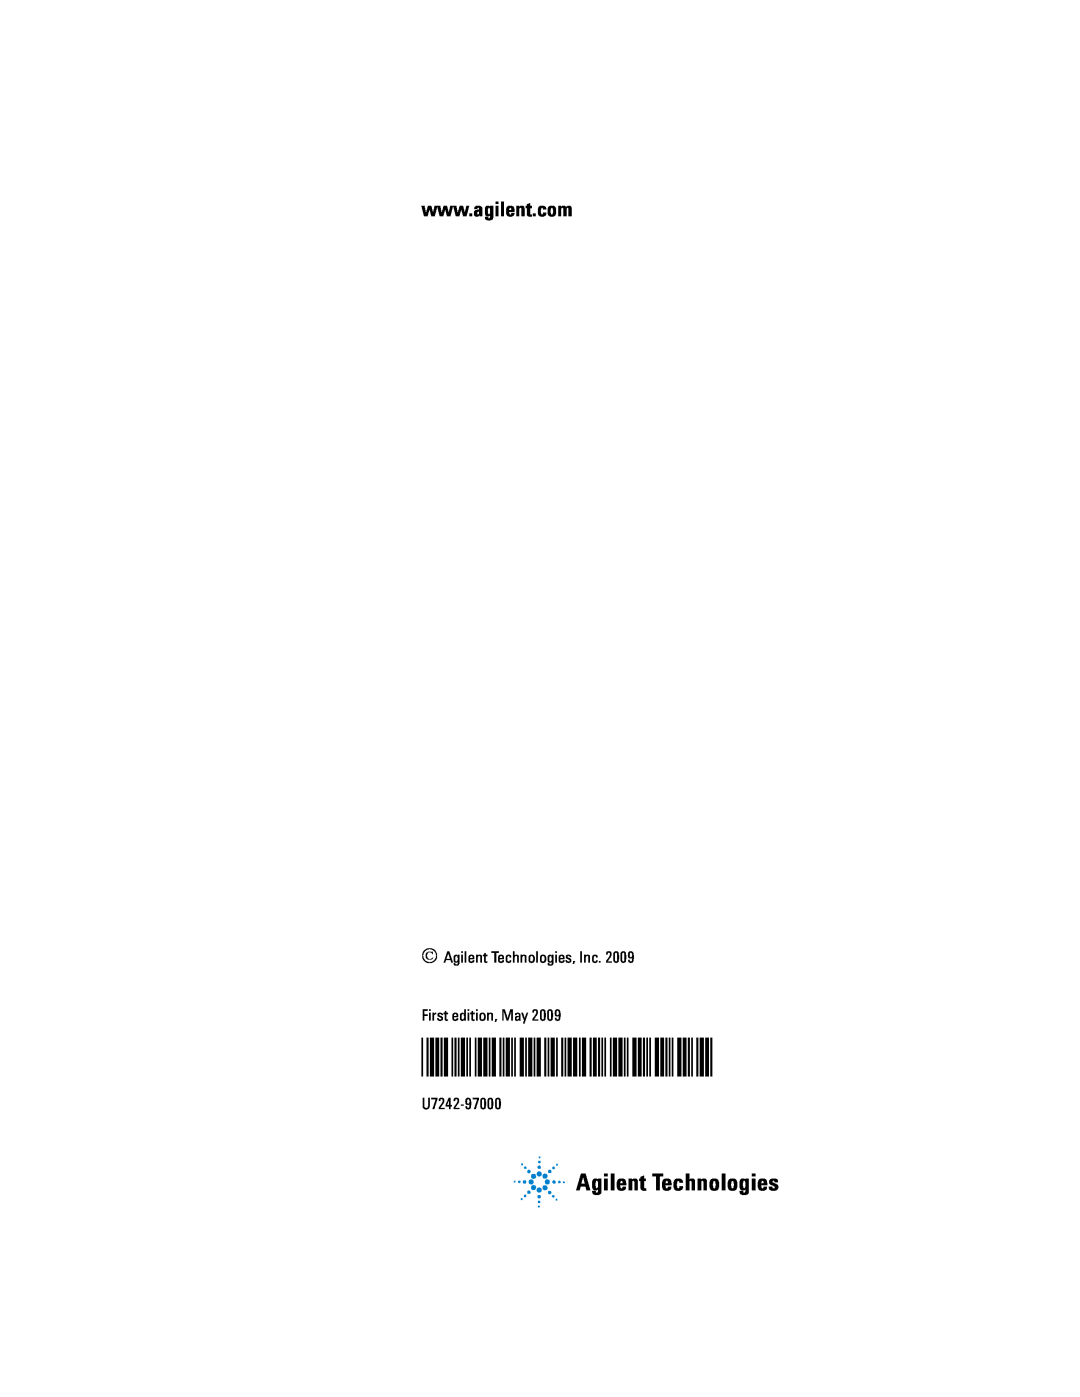 Agilent Technologies U7242A manual U7242-97000, Agilent Technologies, Inc First edition, May 